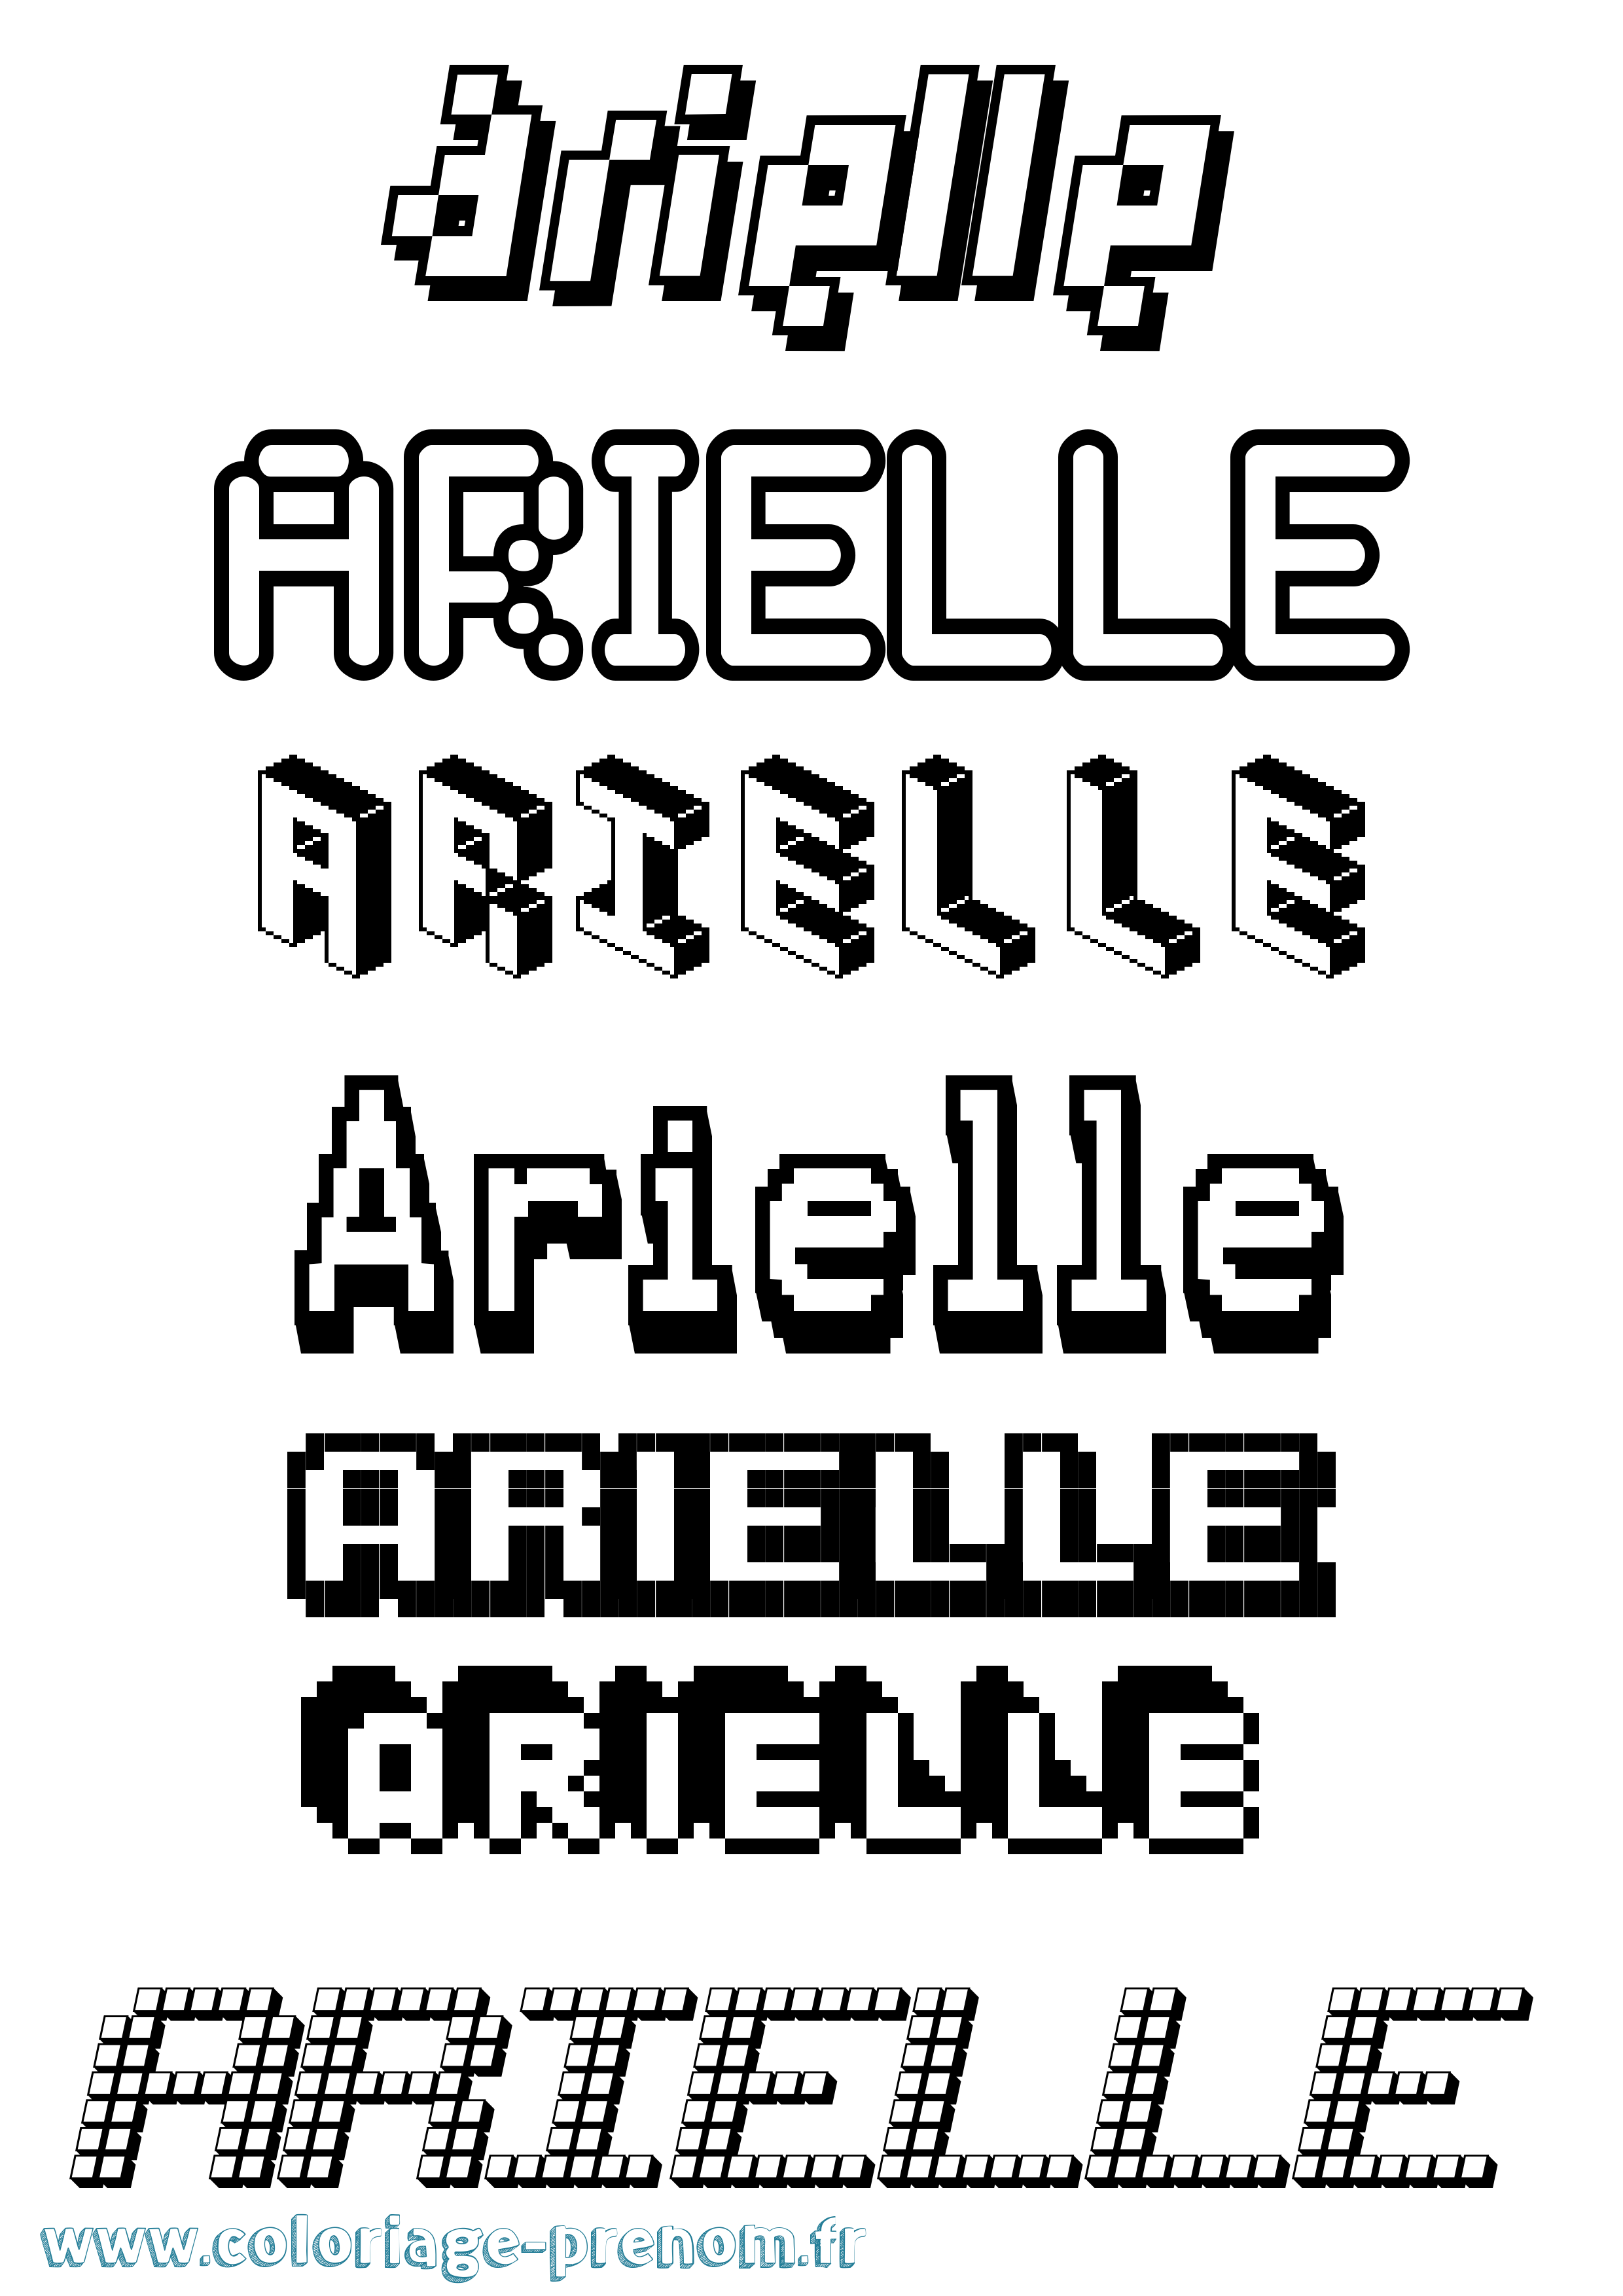 Coloriage prénom Arielle